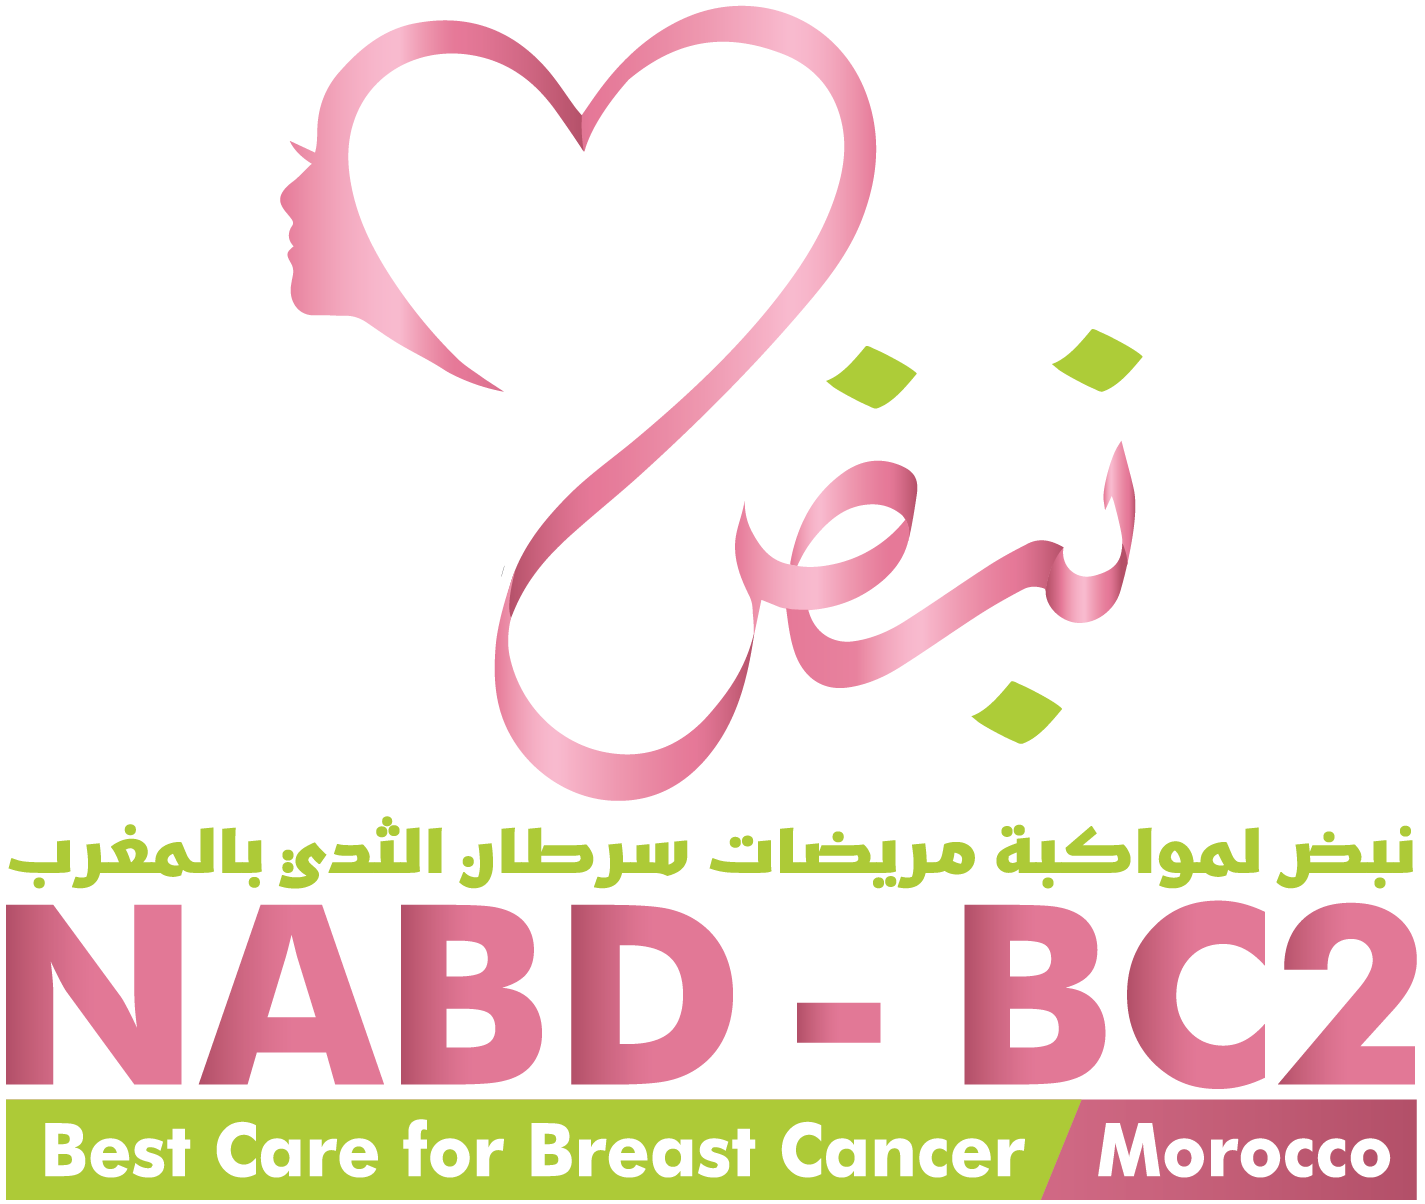 NABC-BC2 Logo Vertical